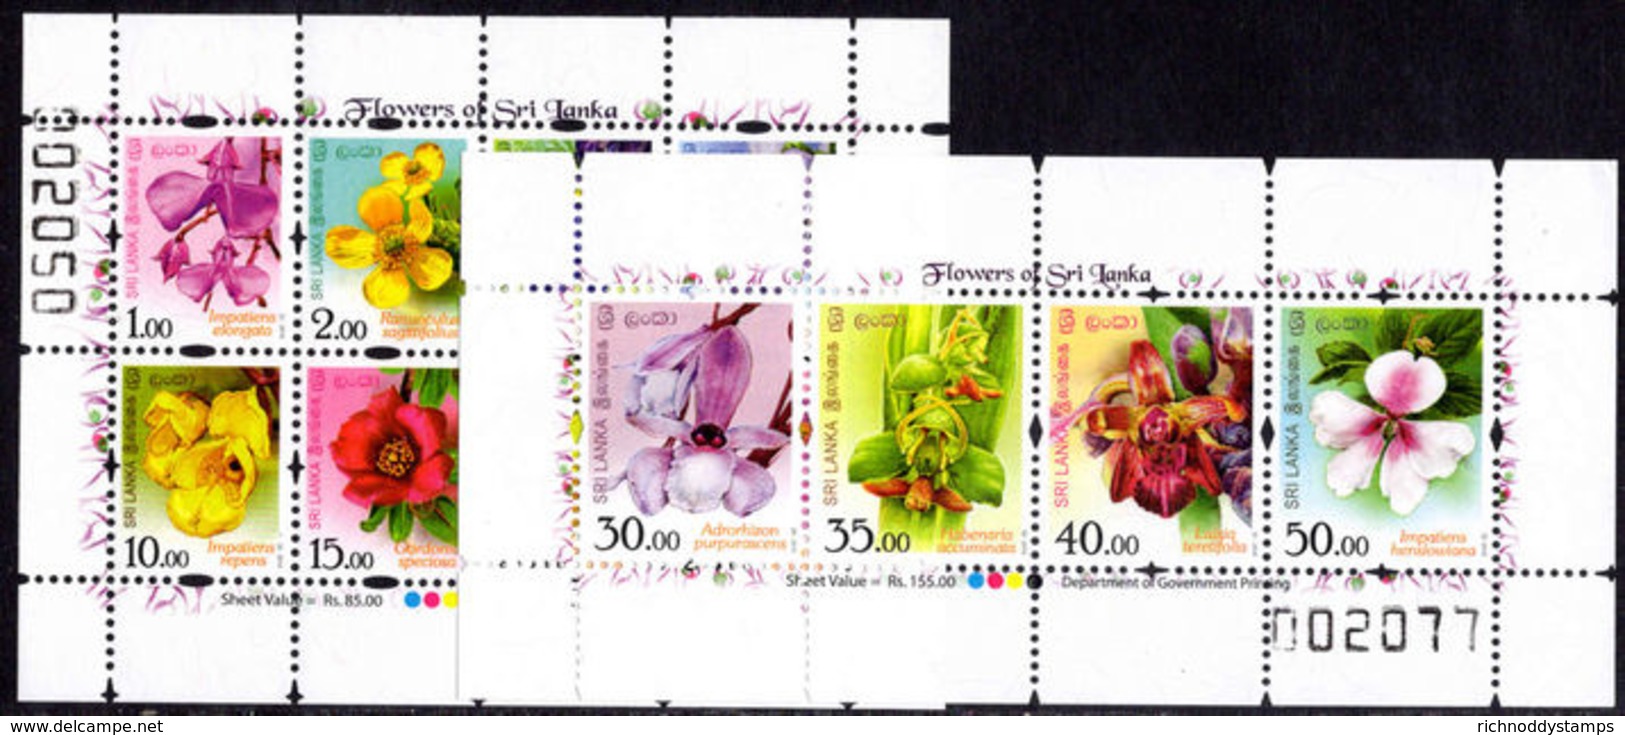 Sri Lanka 2016 Flowers Sheetlets Unmounted Mint. - Thailand